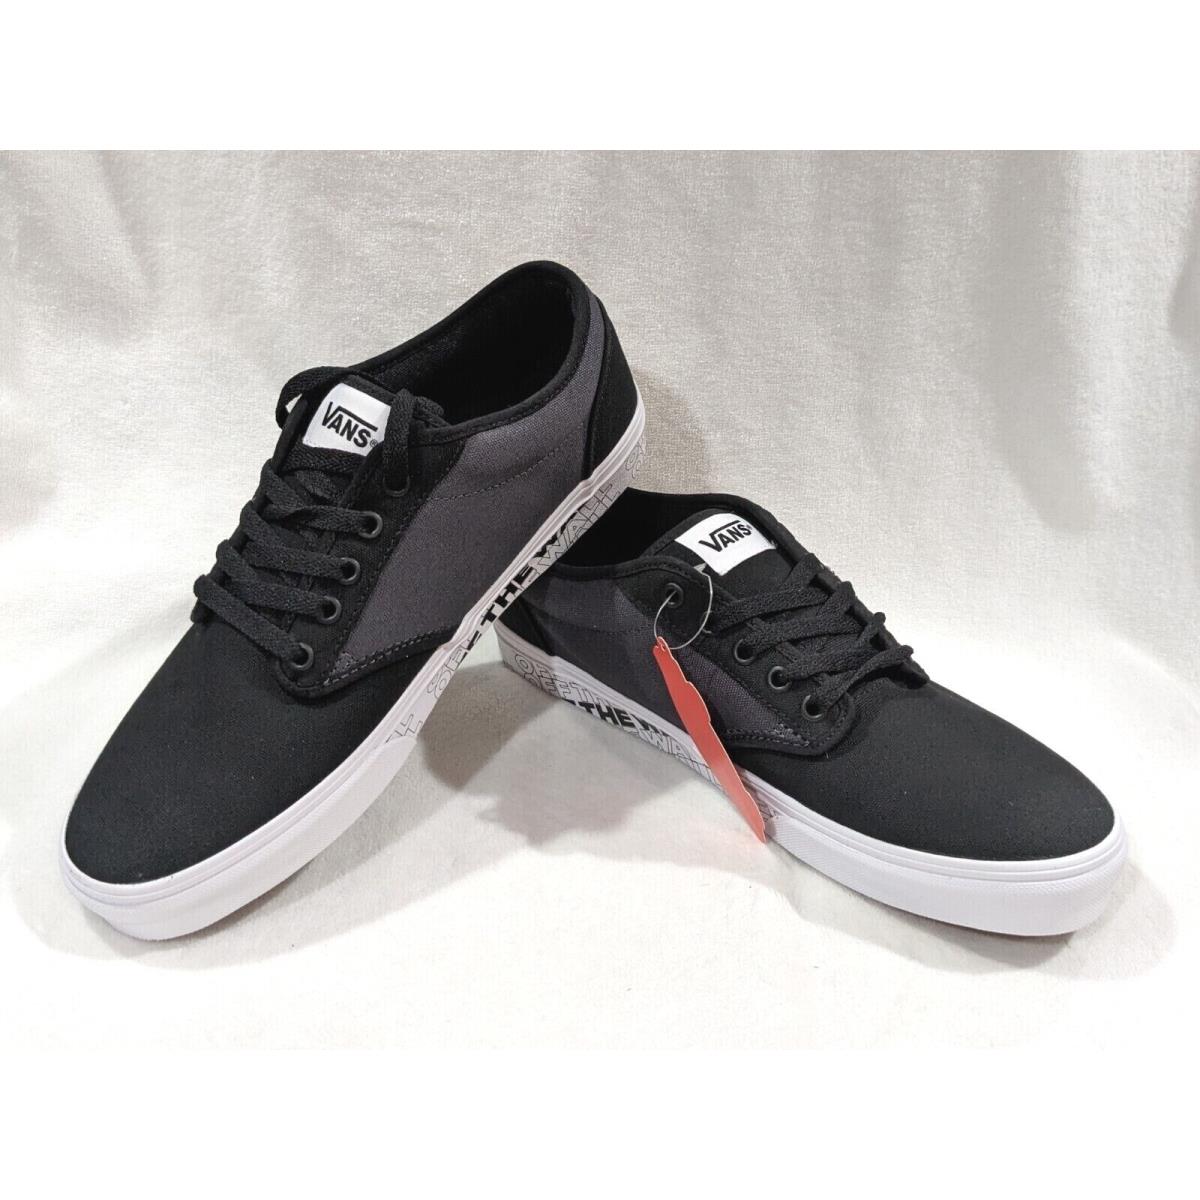 Vans Men`s Atwood Otw Black/white Canvas Skate Shoes - Size 11.5